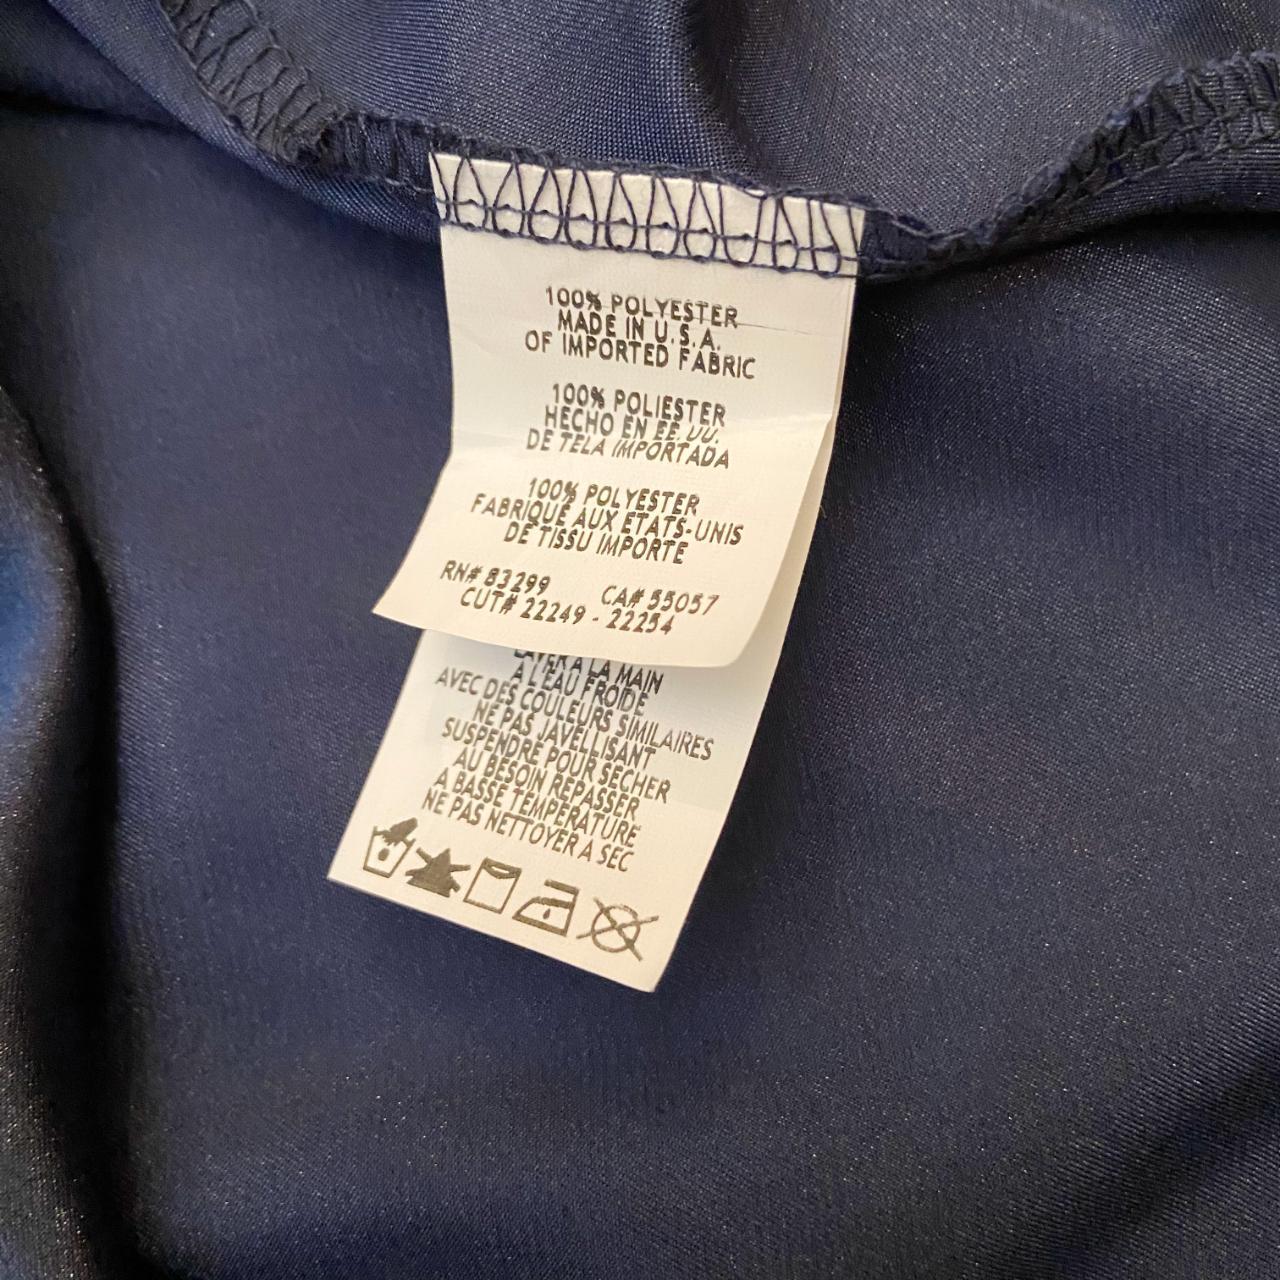 Bebe Cowl-Neck Blue Midi Dress Fabric: 100% Polyester - Depop